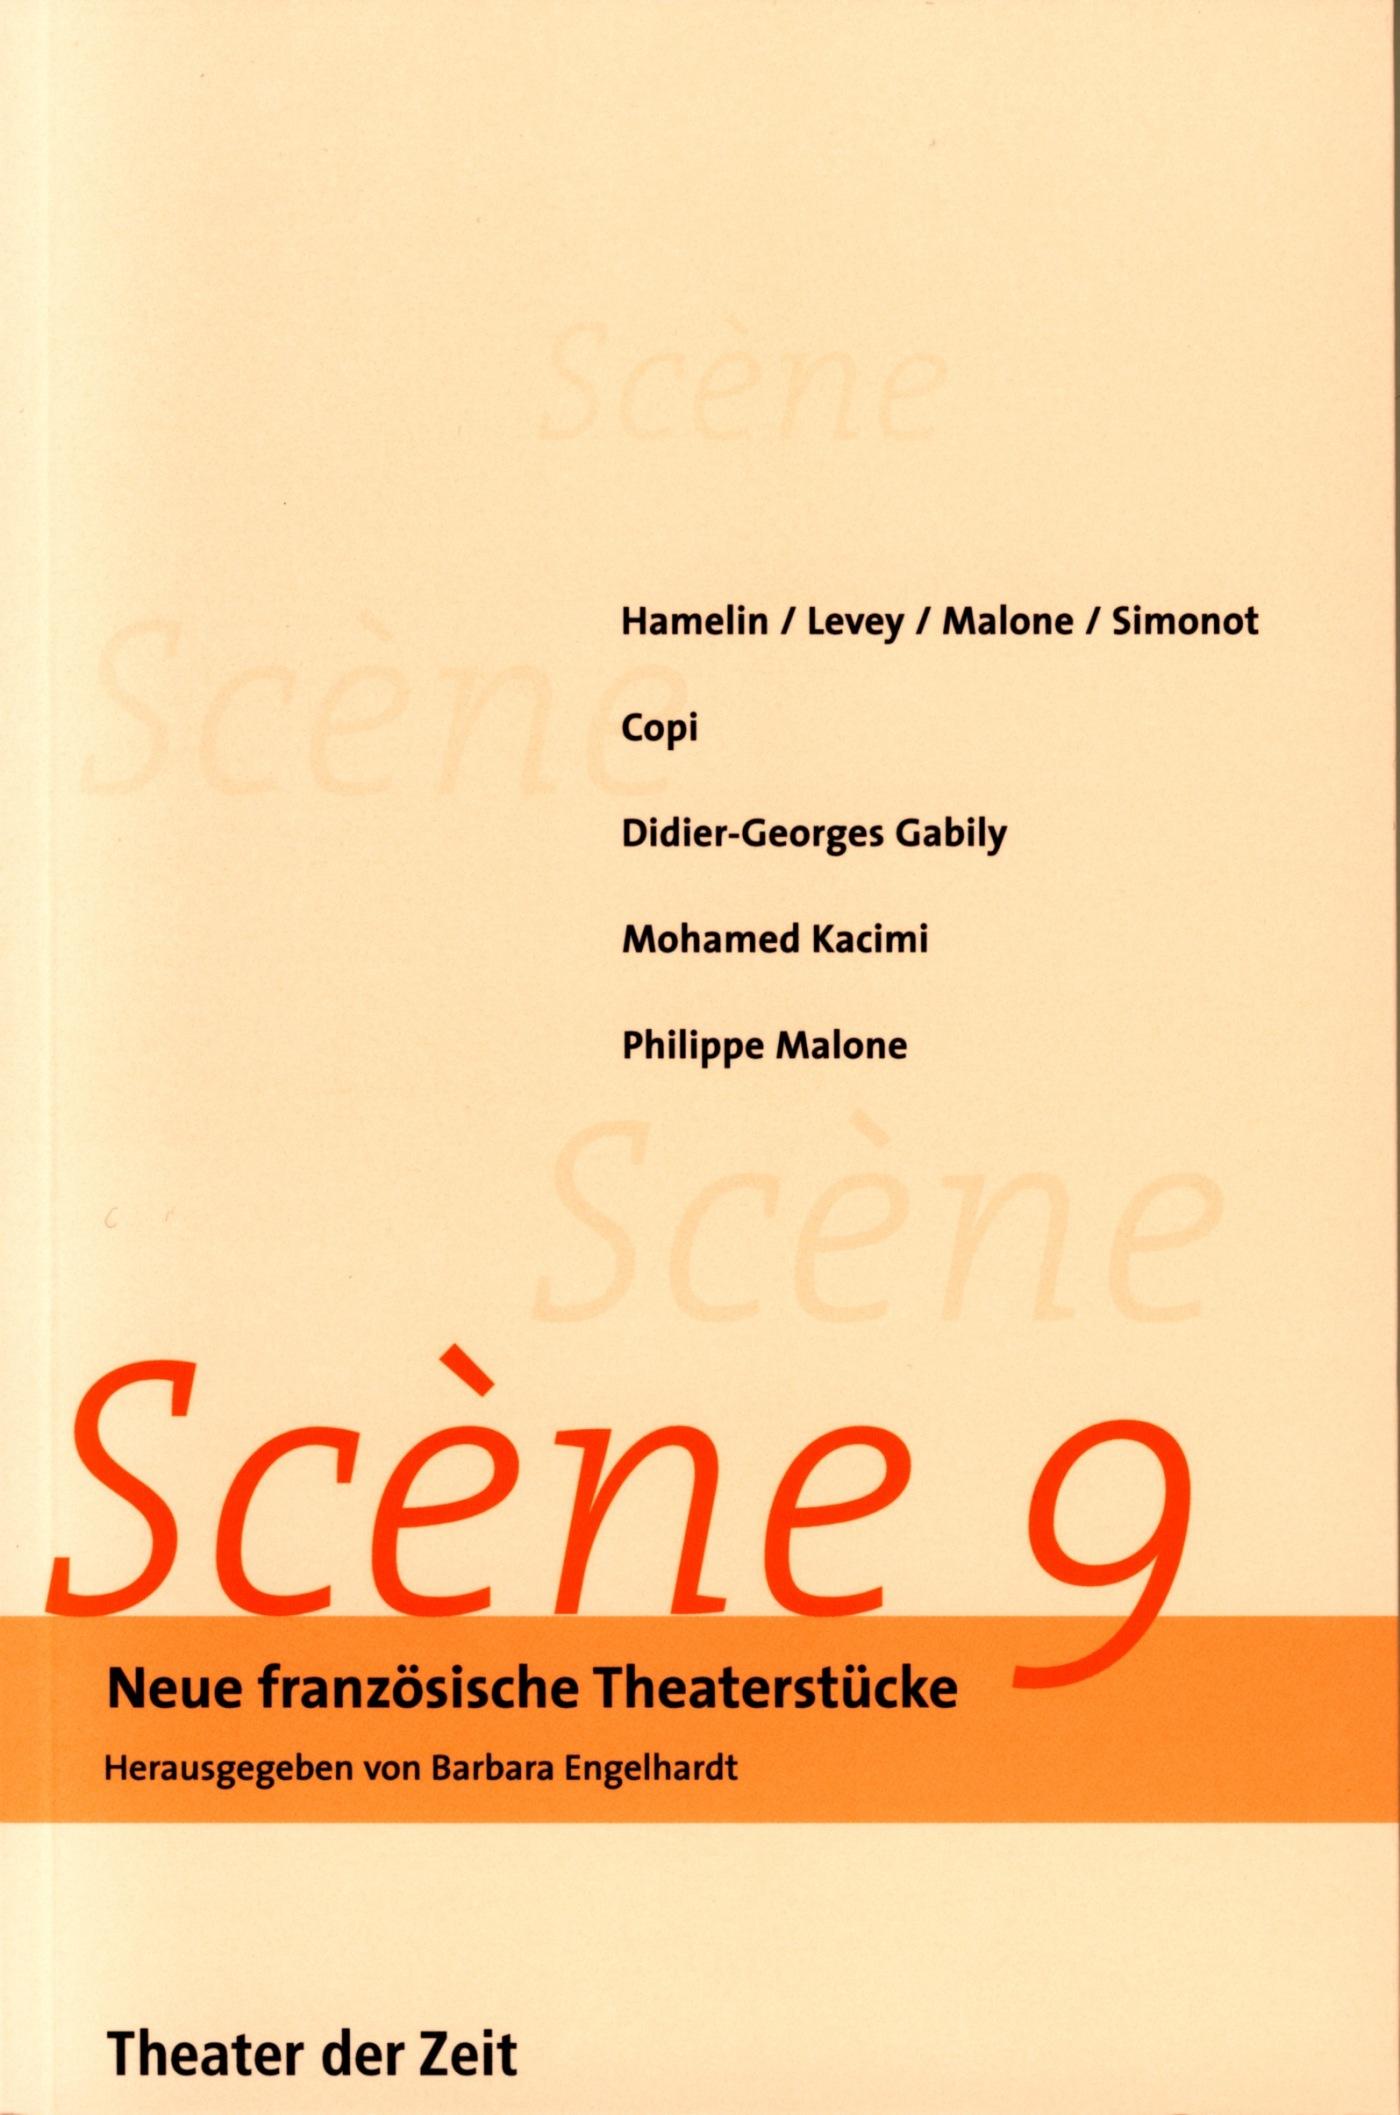 "Scène 9"